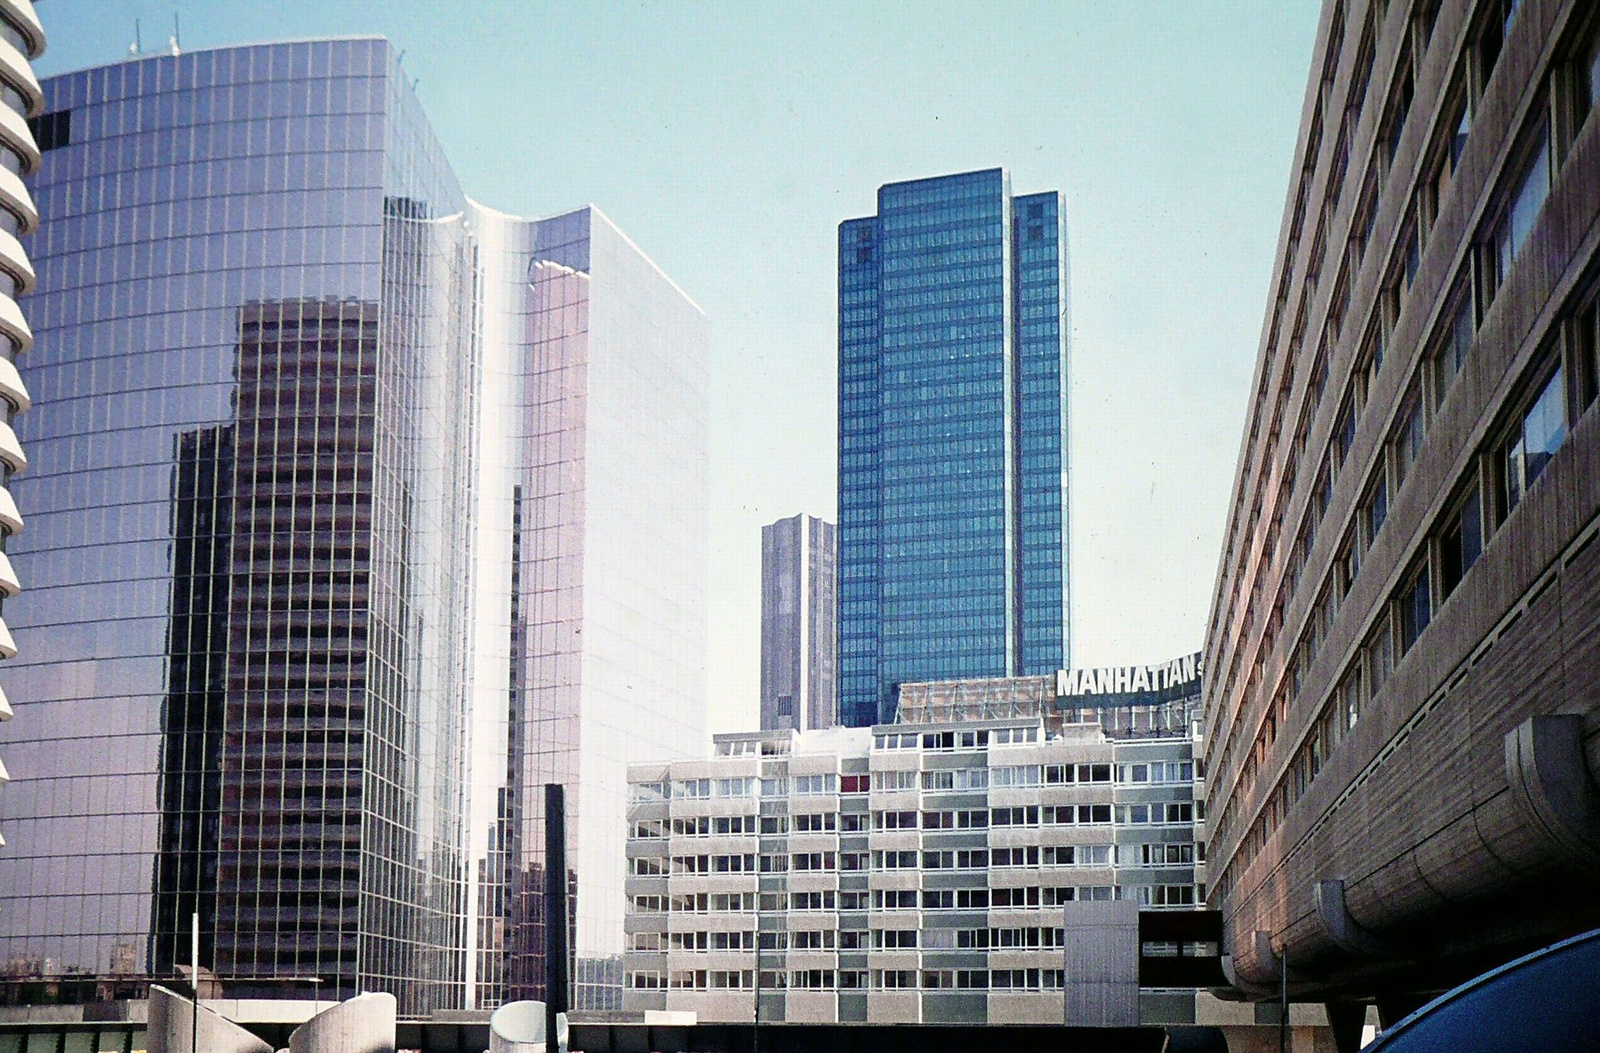 Párizs - La Défense, 1976-83